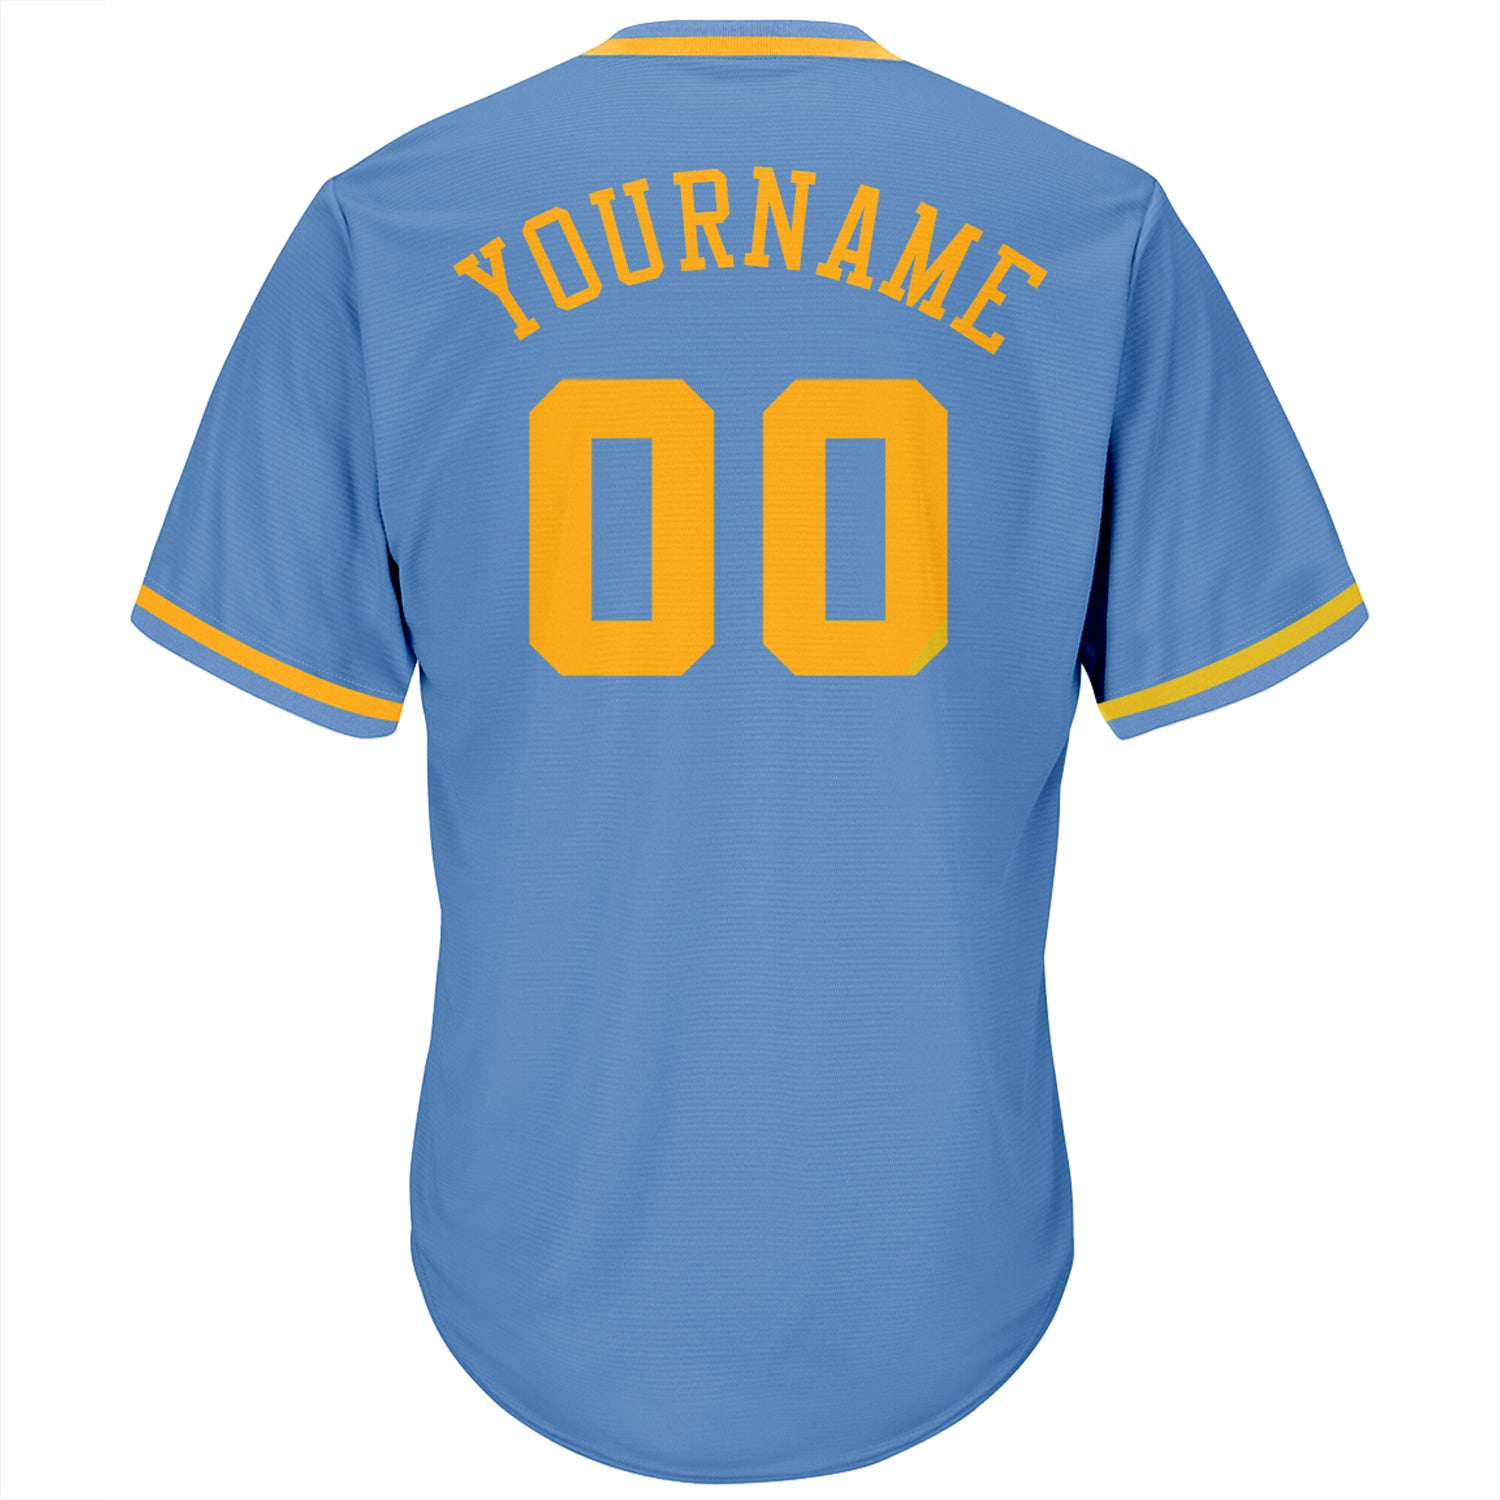 Custom Powder Blue Yellow-White Authentic Baseball Jersey